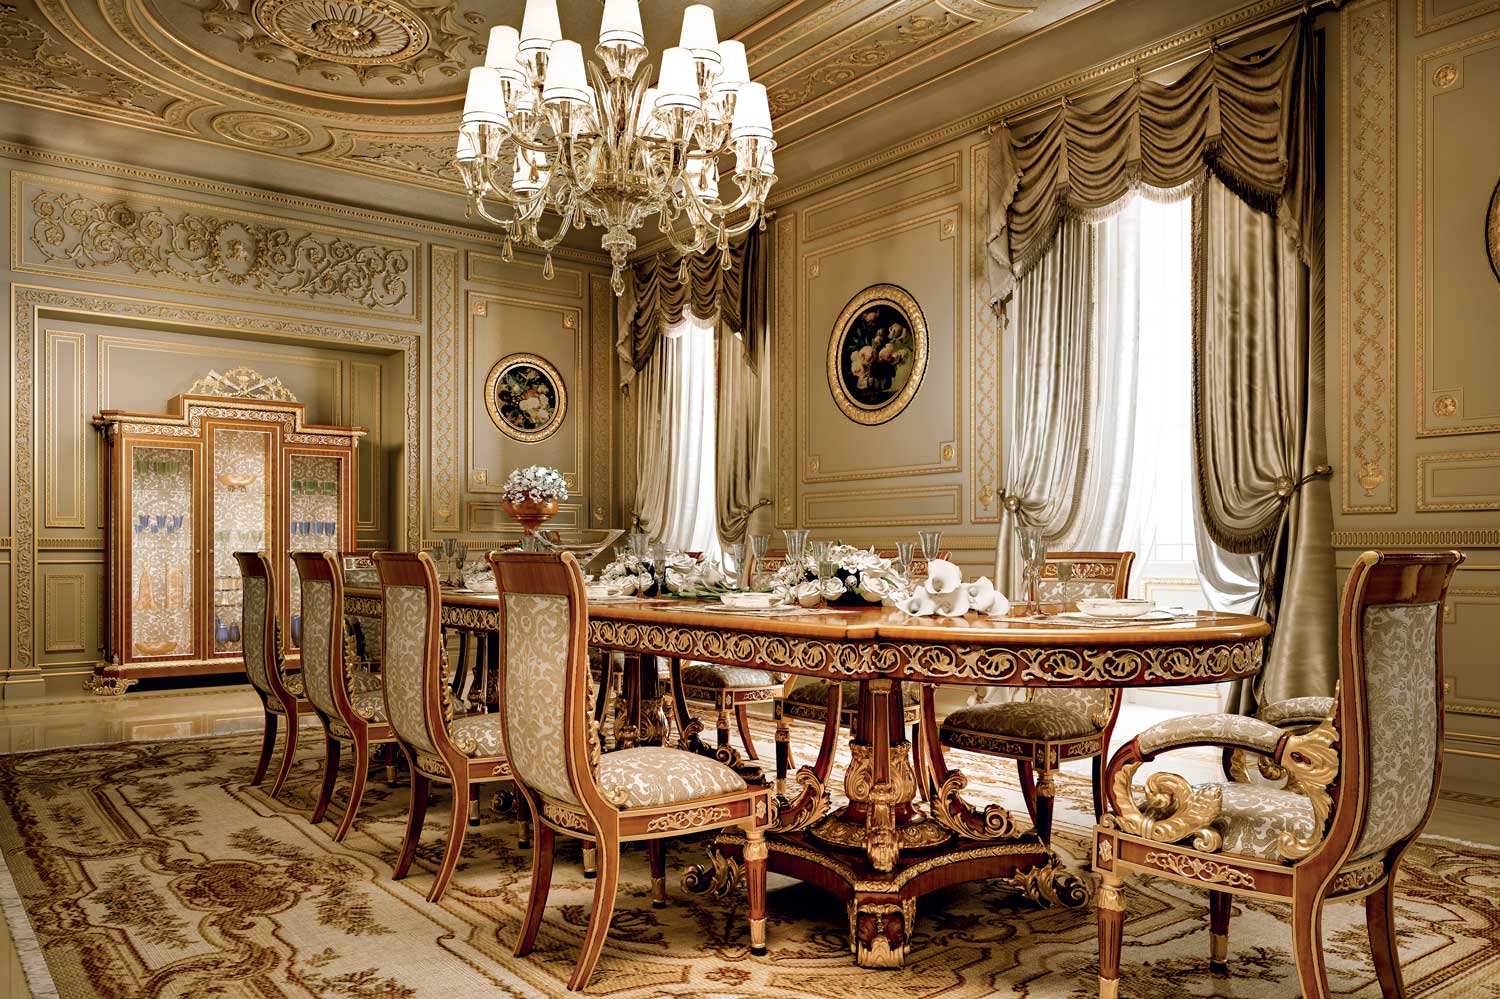 Classic Italian furniture with ornate decoration | Utec 1921 sourcing advisory